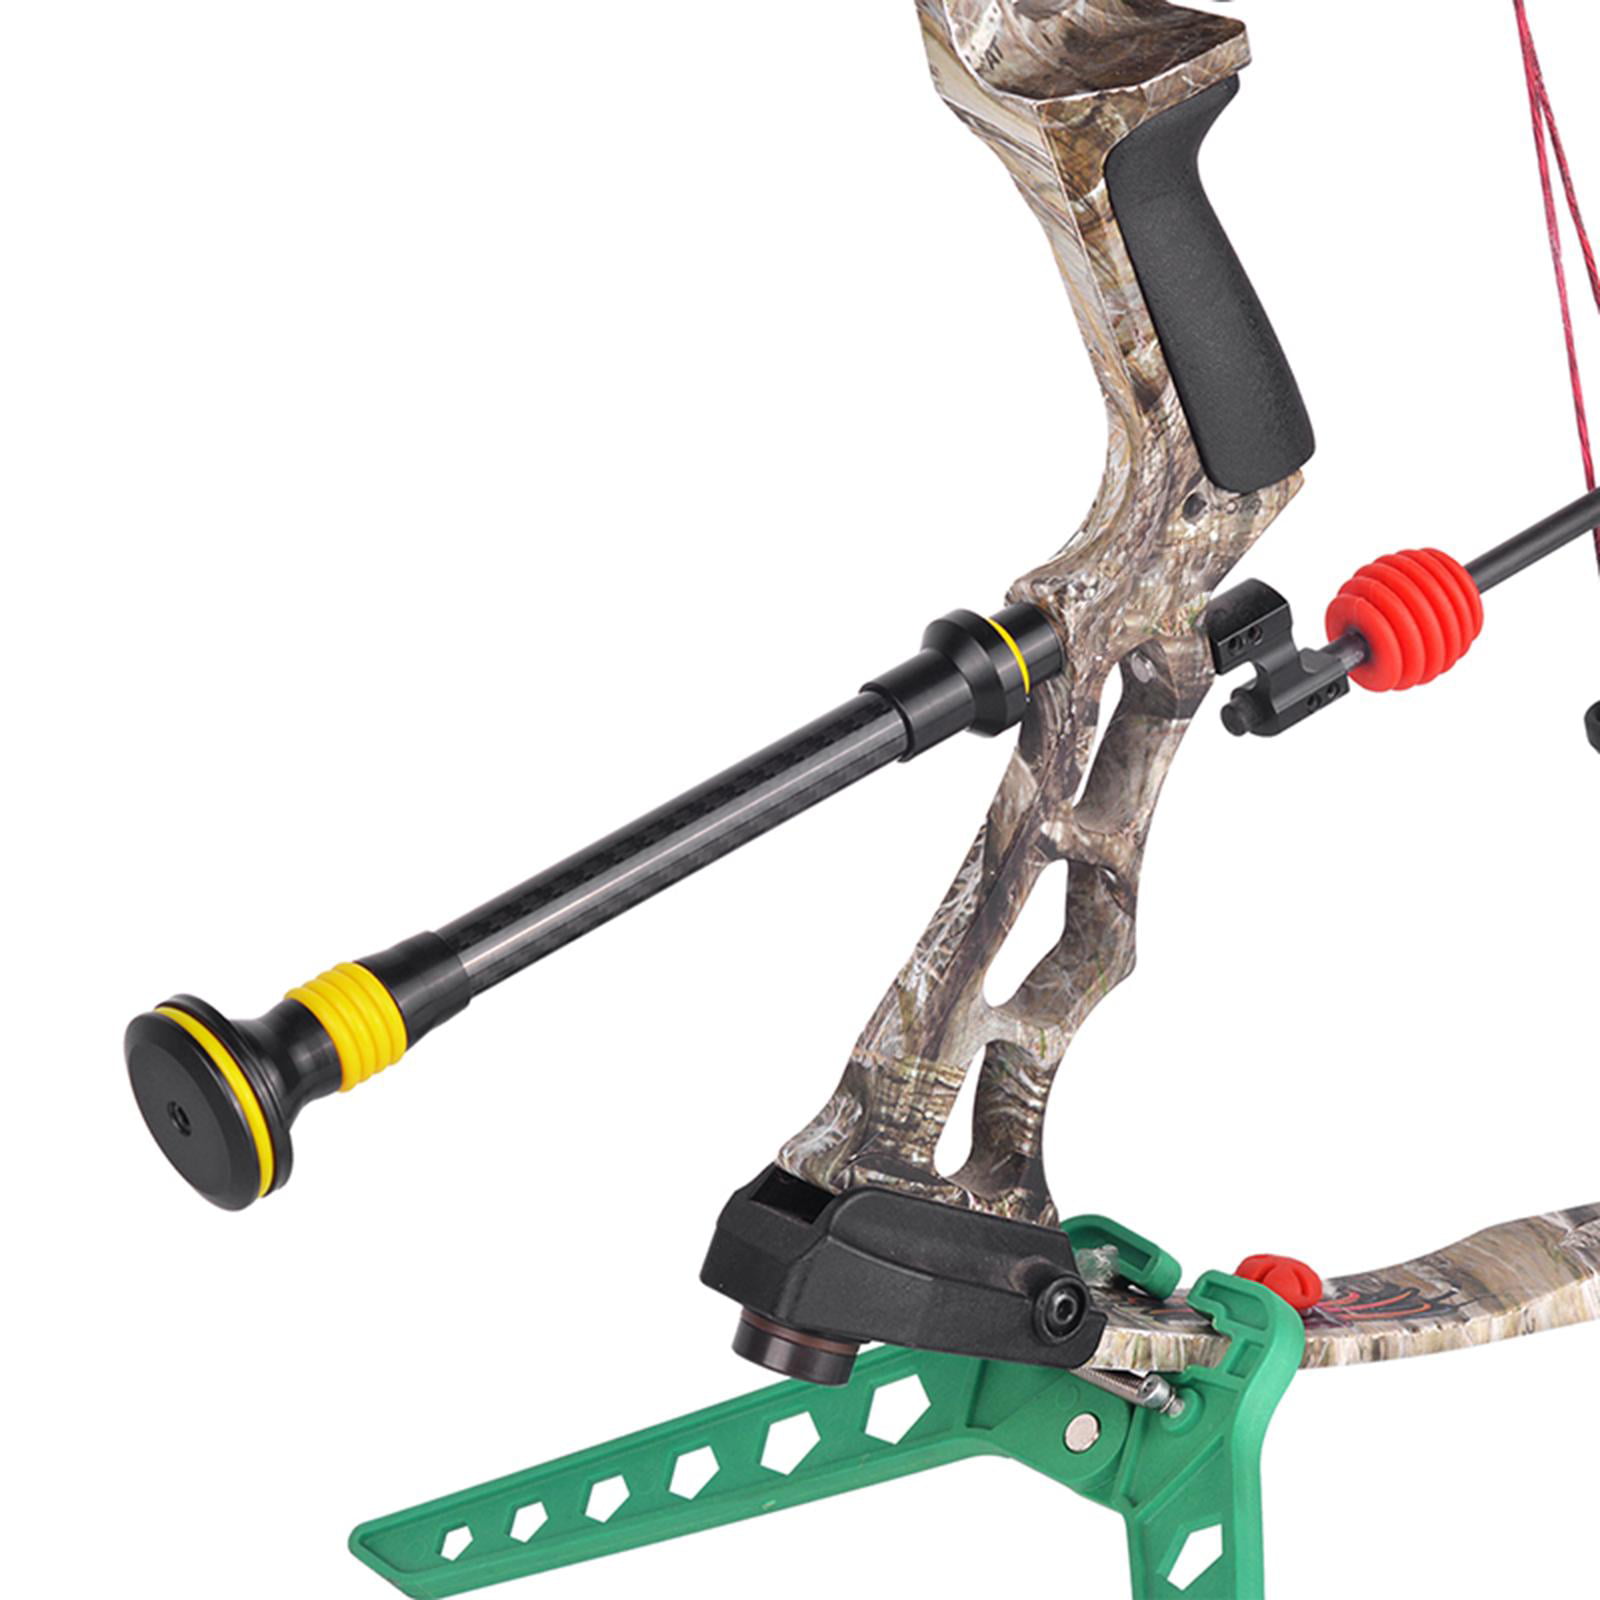 TruGlo carbon fiber compound archery bow stabilizer deer hunting wildlife game 